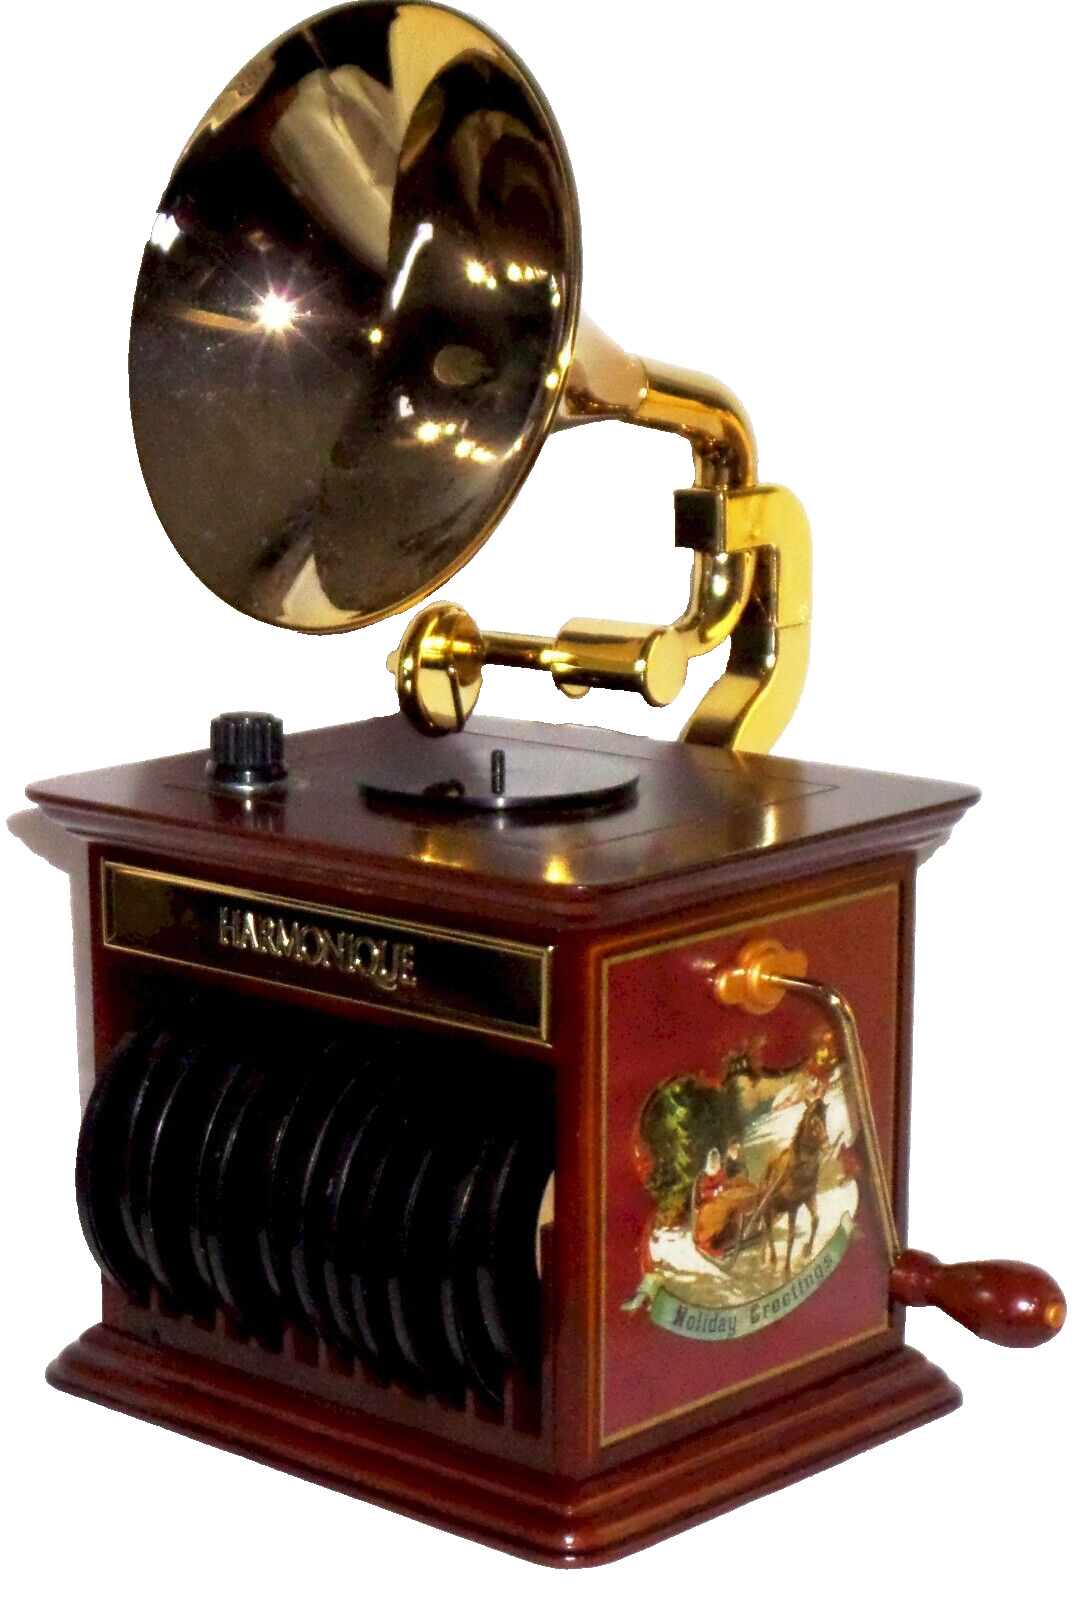 Mr. Christmas Harmonique Gramophone 12 Mini Records Plays Christmas Songs